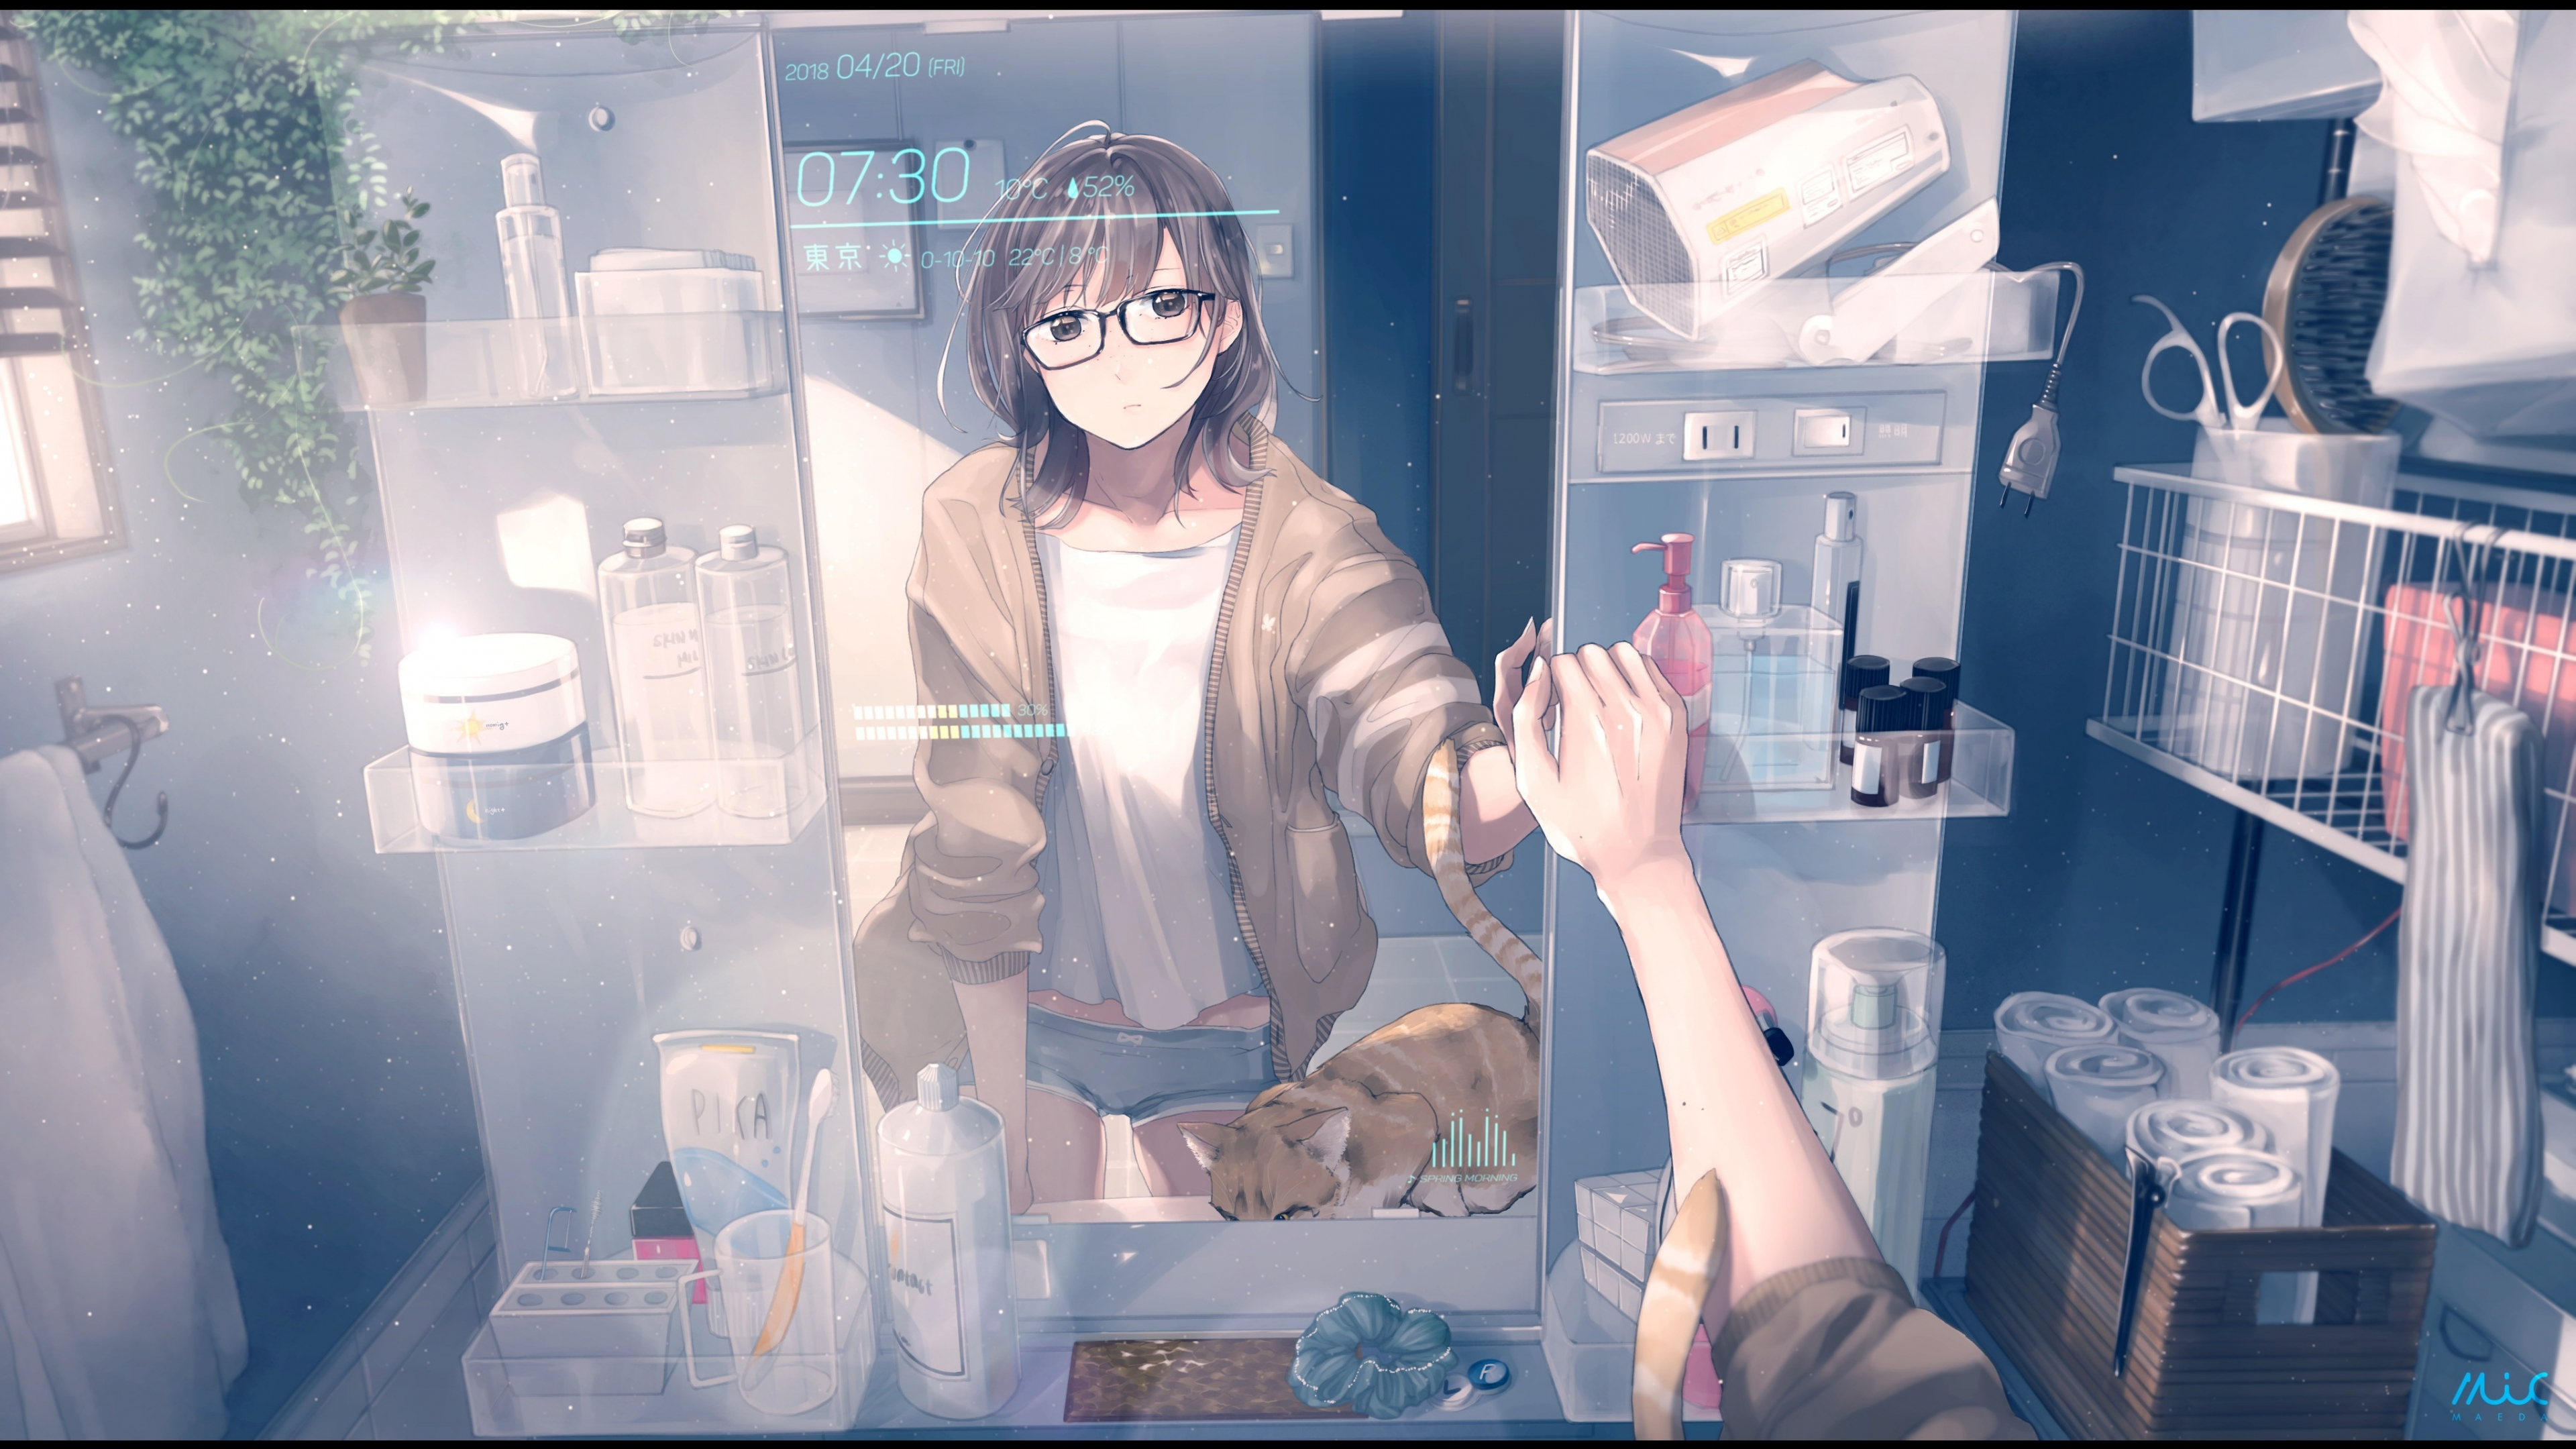 Download 3840x2160 Wallpaper Bathroom Anime Girl Reflections Mirror Original 4k Uhd 16 9 Widescreen 3840x2160 Hd Image Background 6514